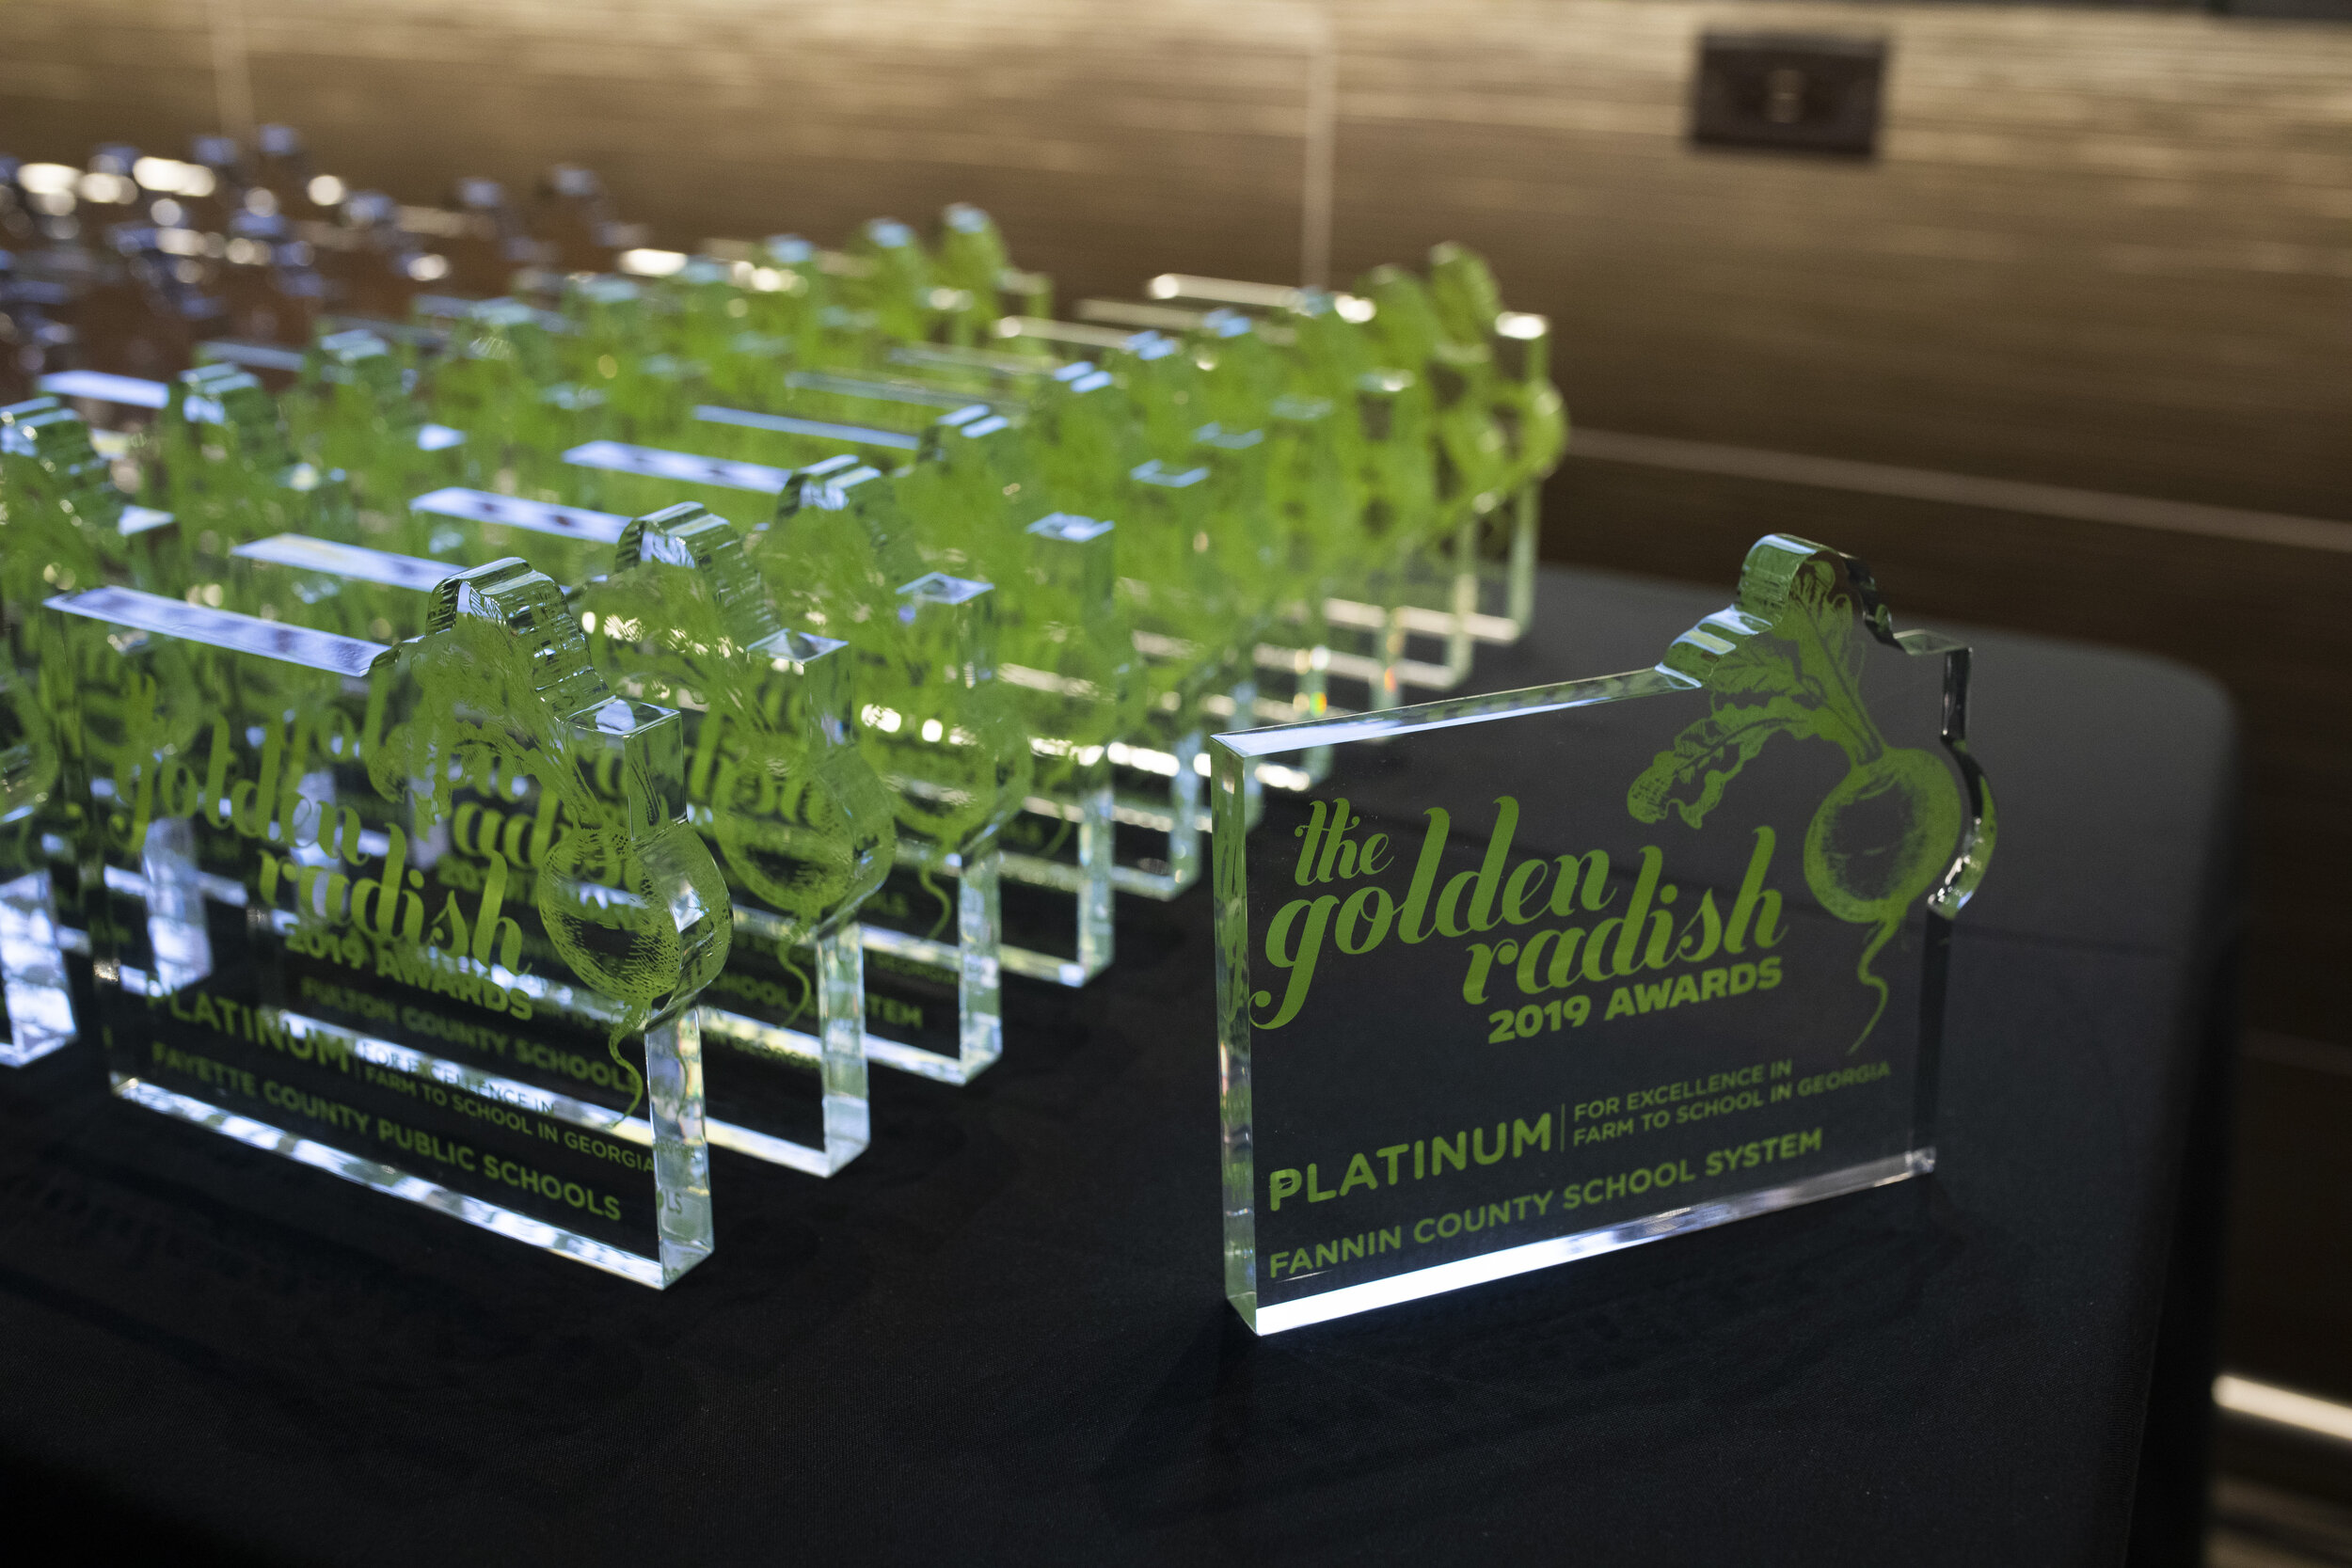 2019 Golden Radish Award Trophies.jpg